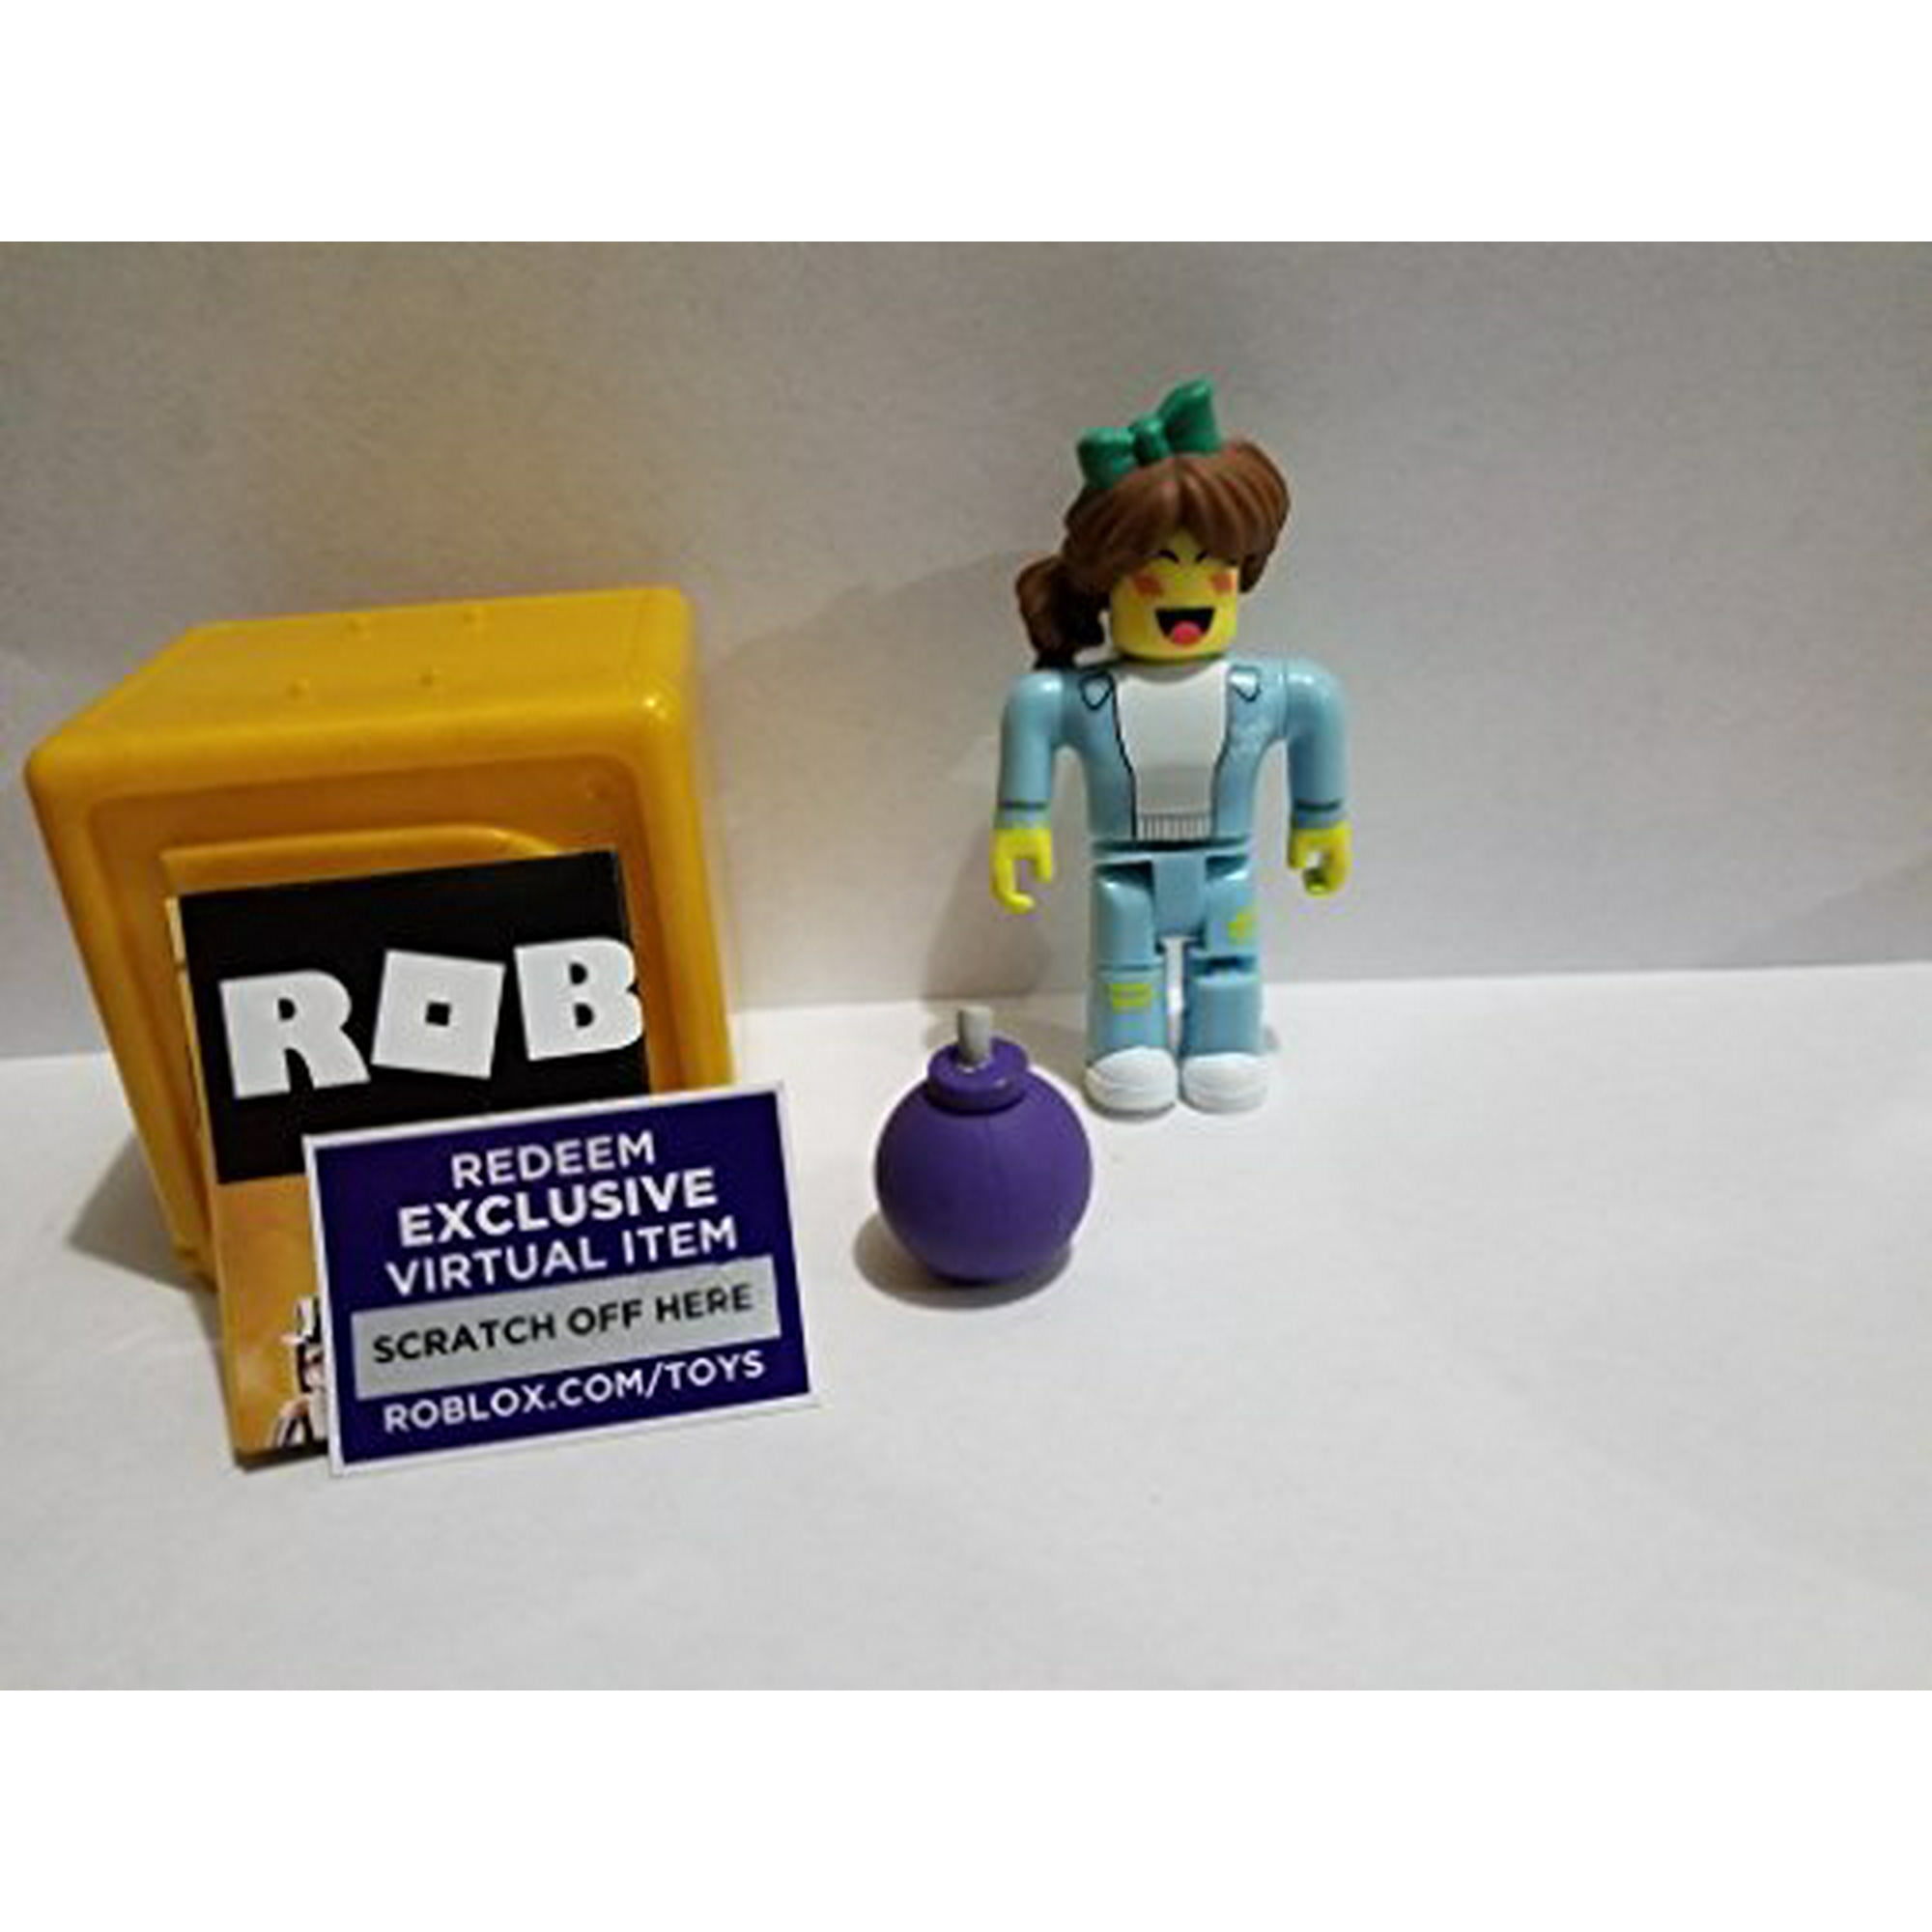 Roblox Gold Celebrity Series Super Bomb Survival Shopgirl Action Figure Mystery Box Virtual Item Code 2 5 Walmart Canada - bomb codes roblox